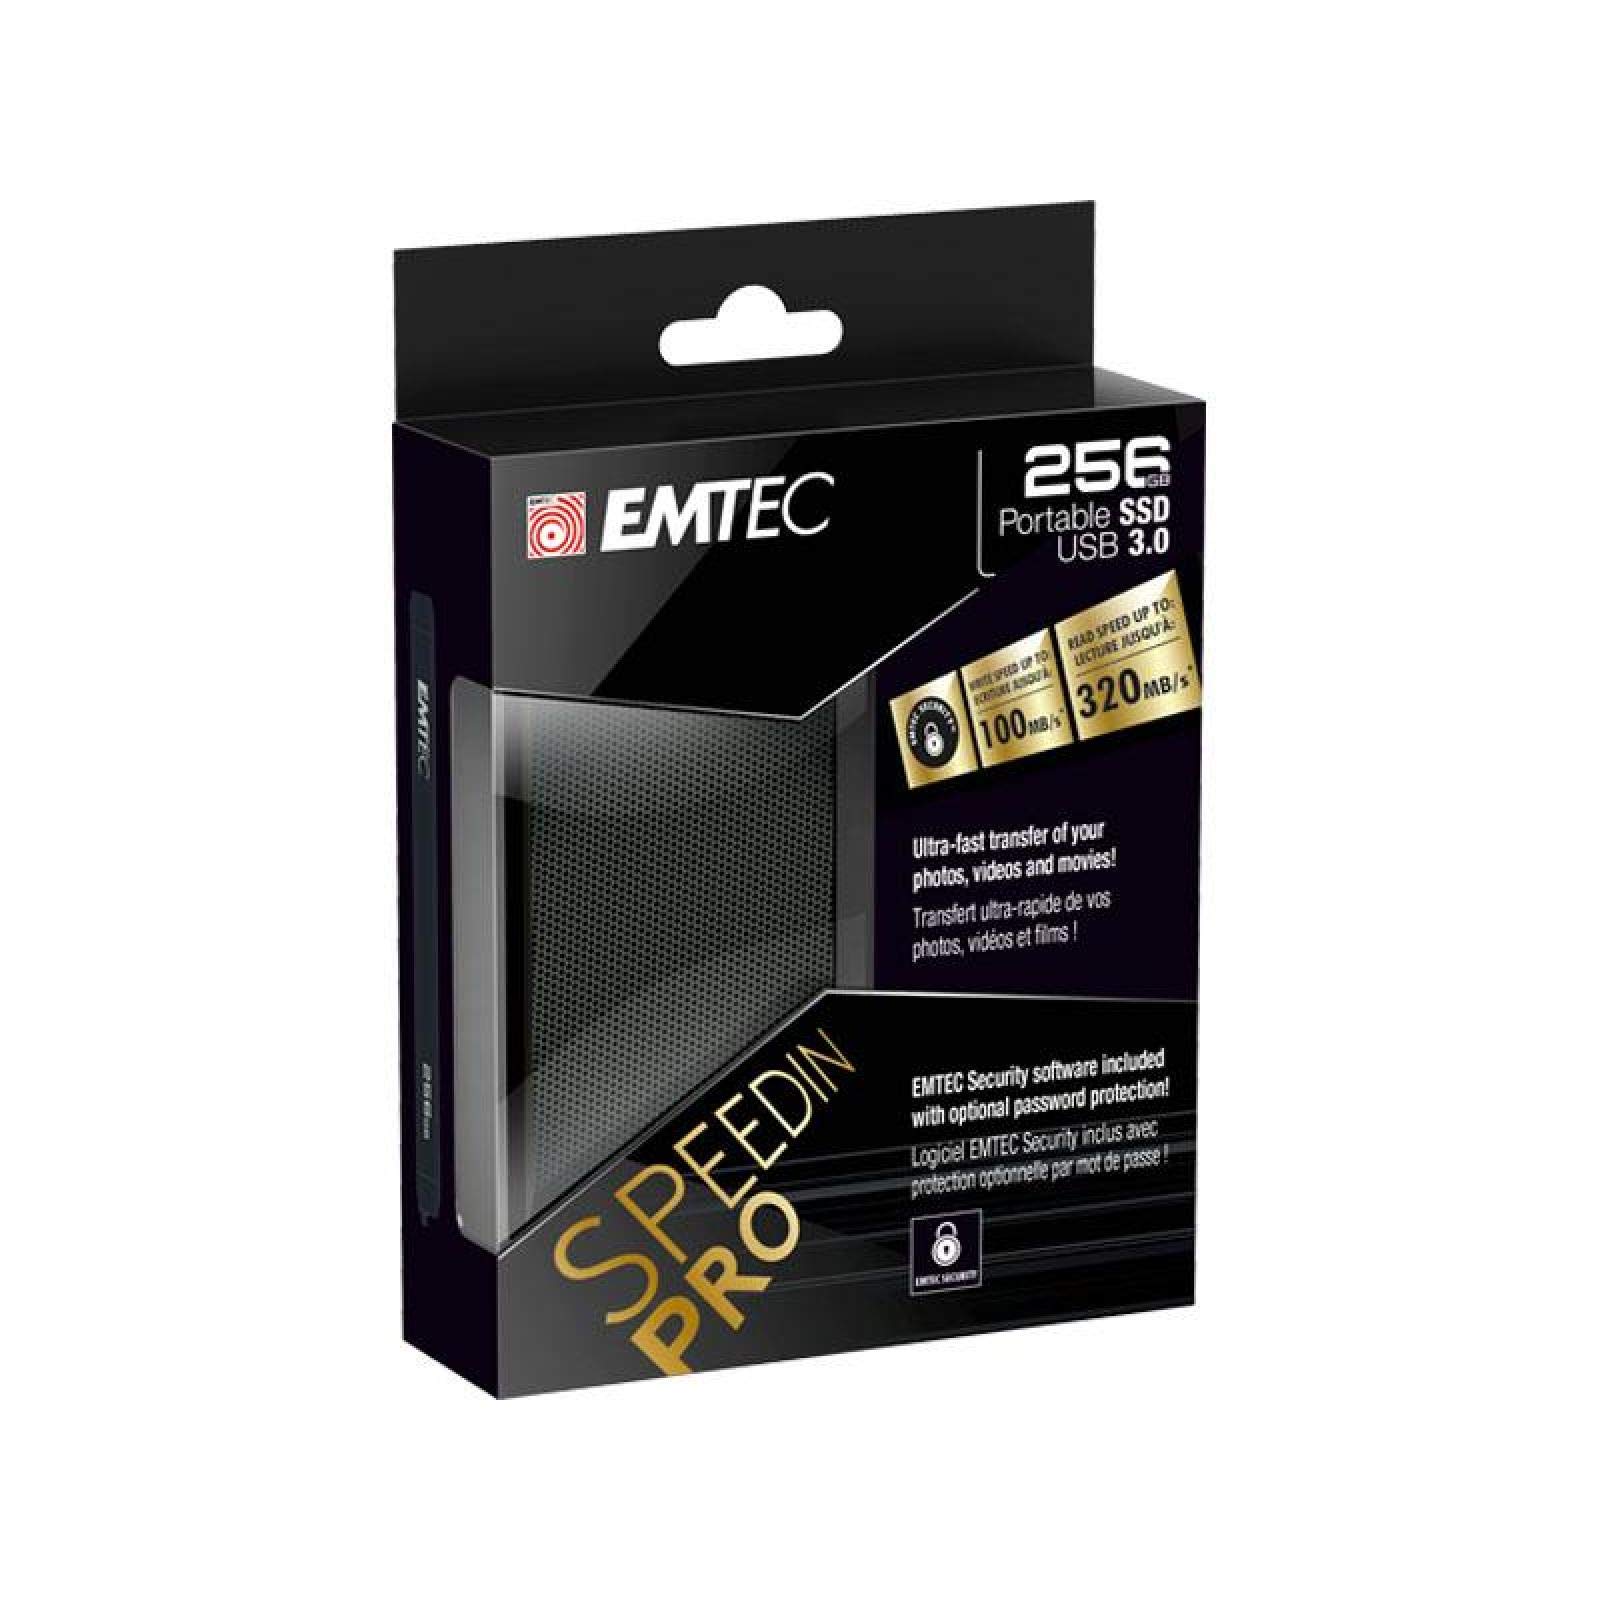 Emtec Speedin USB 3.0ポータブル外付け1.8SSD並行輸入品